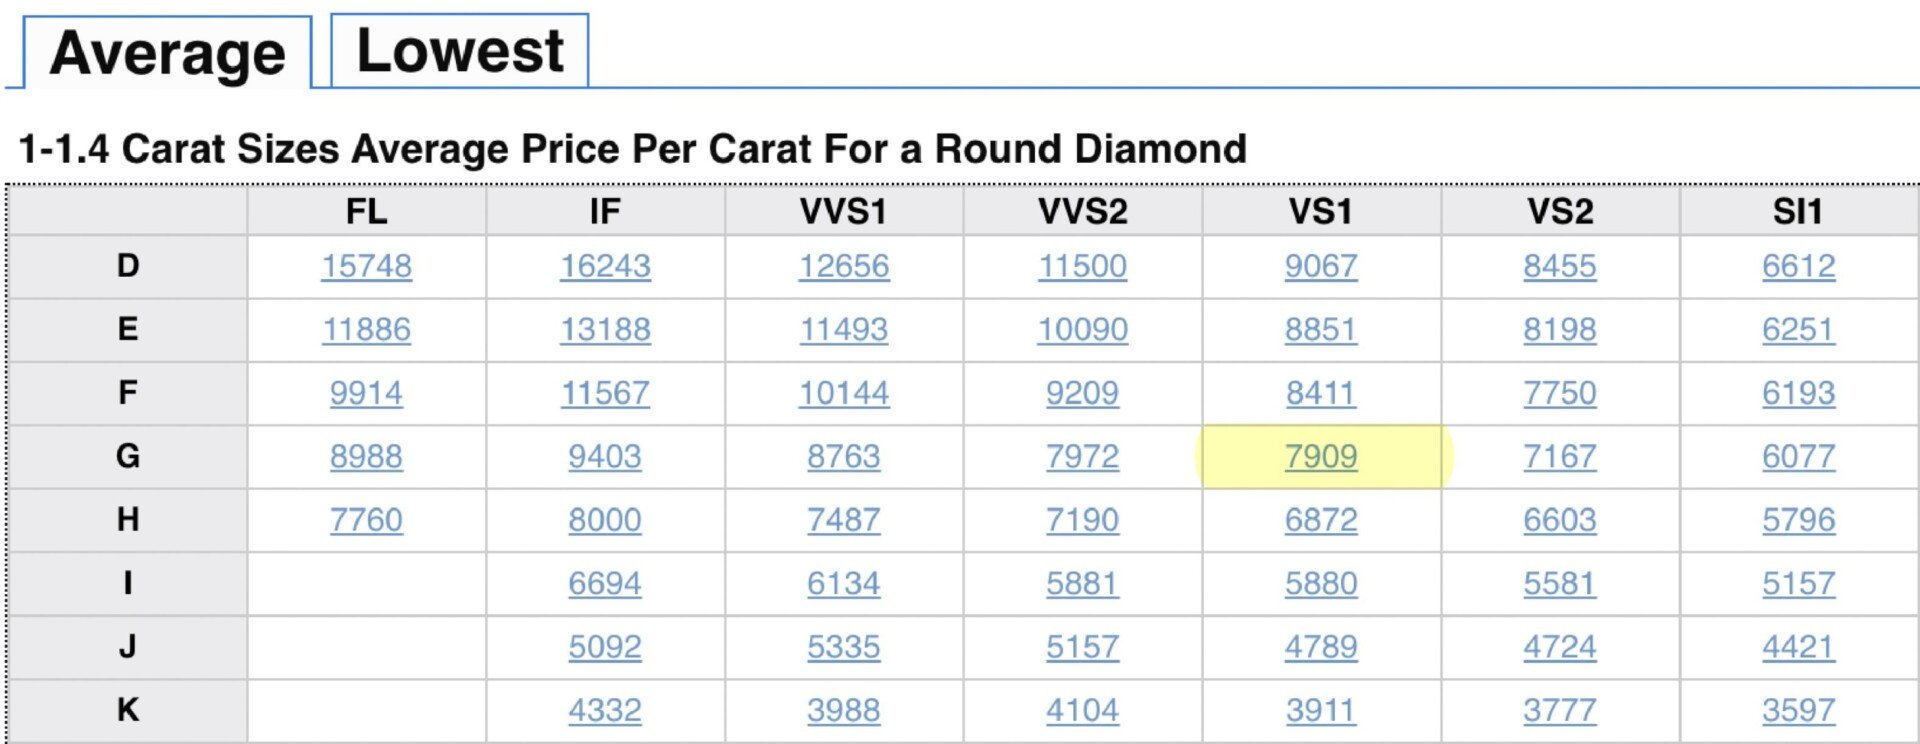 Average Diamond Prices - May 2021.